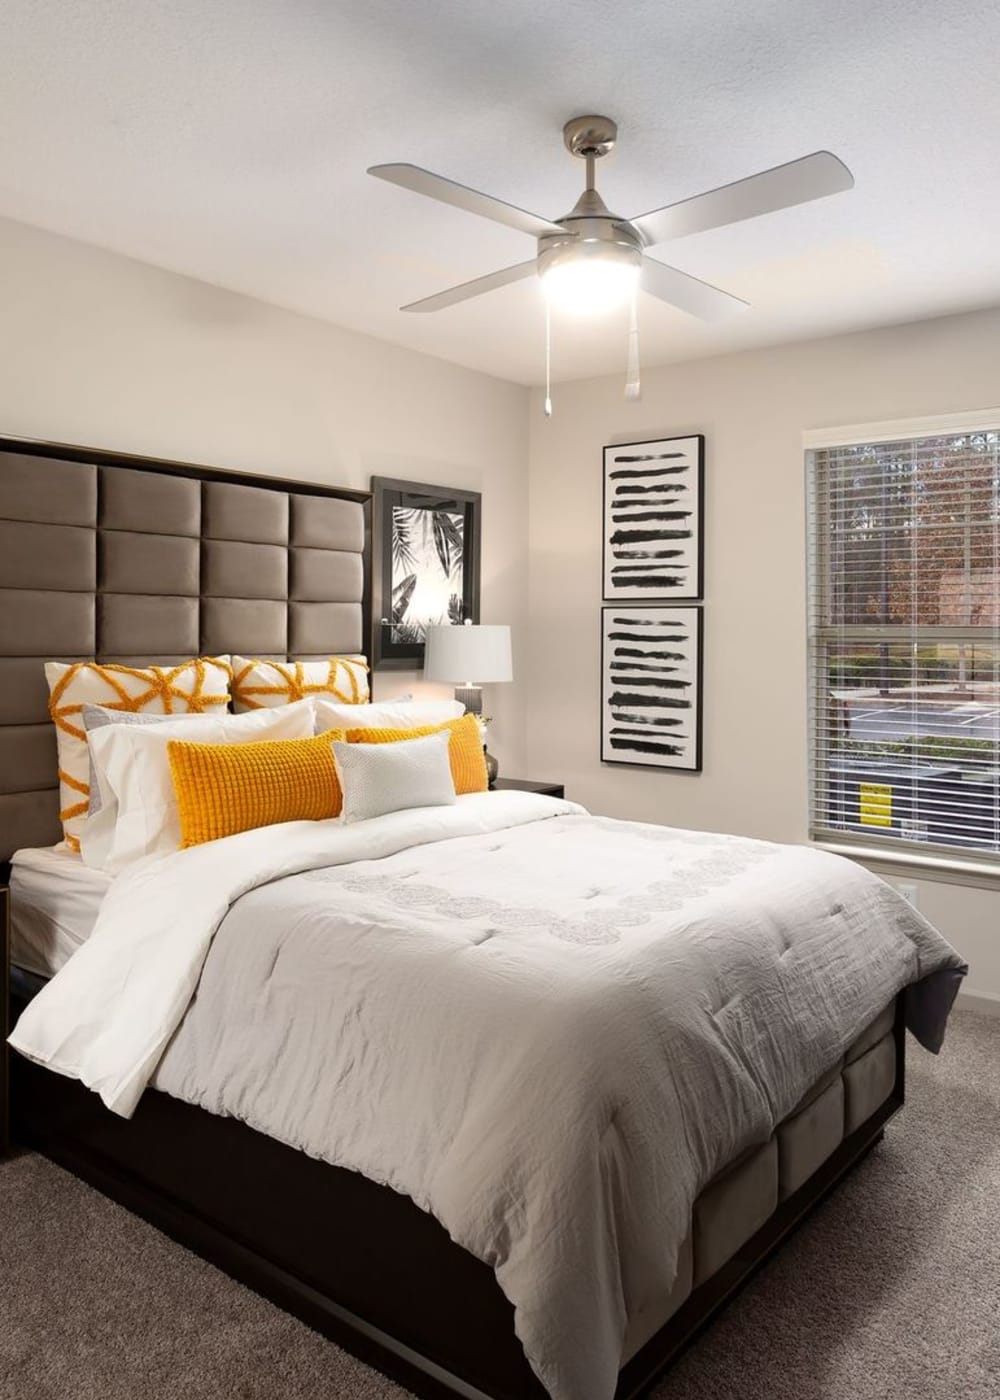 Bedroom with ceiling fan at Landing Square in Atlanta, Georgia